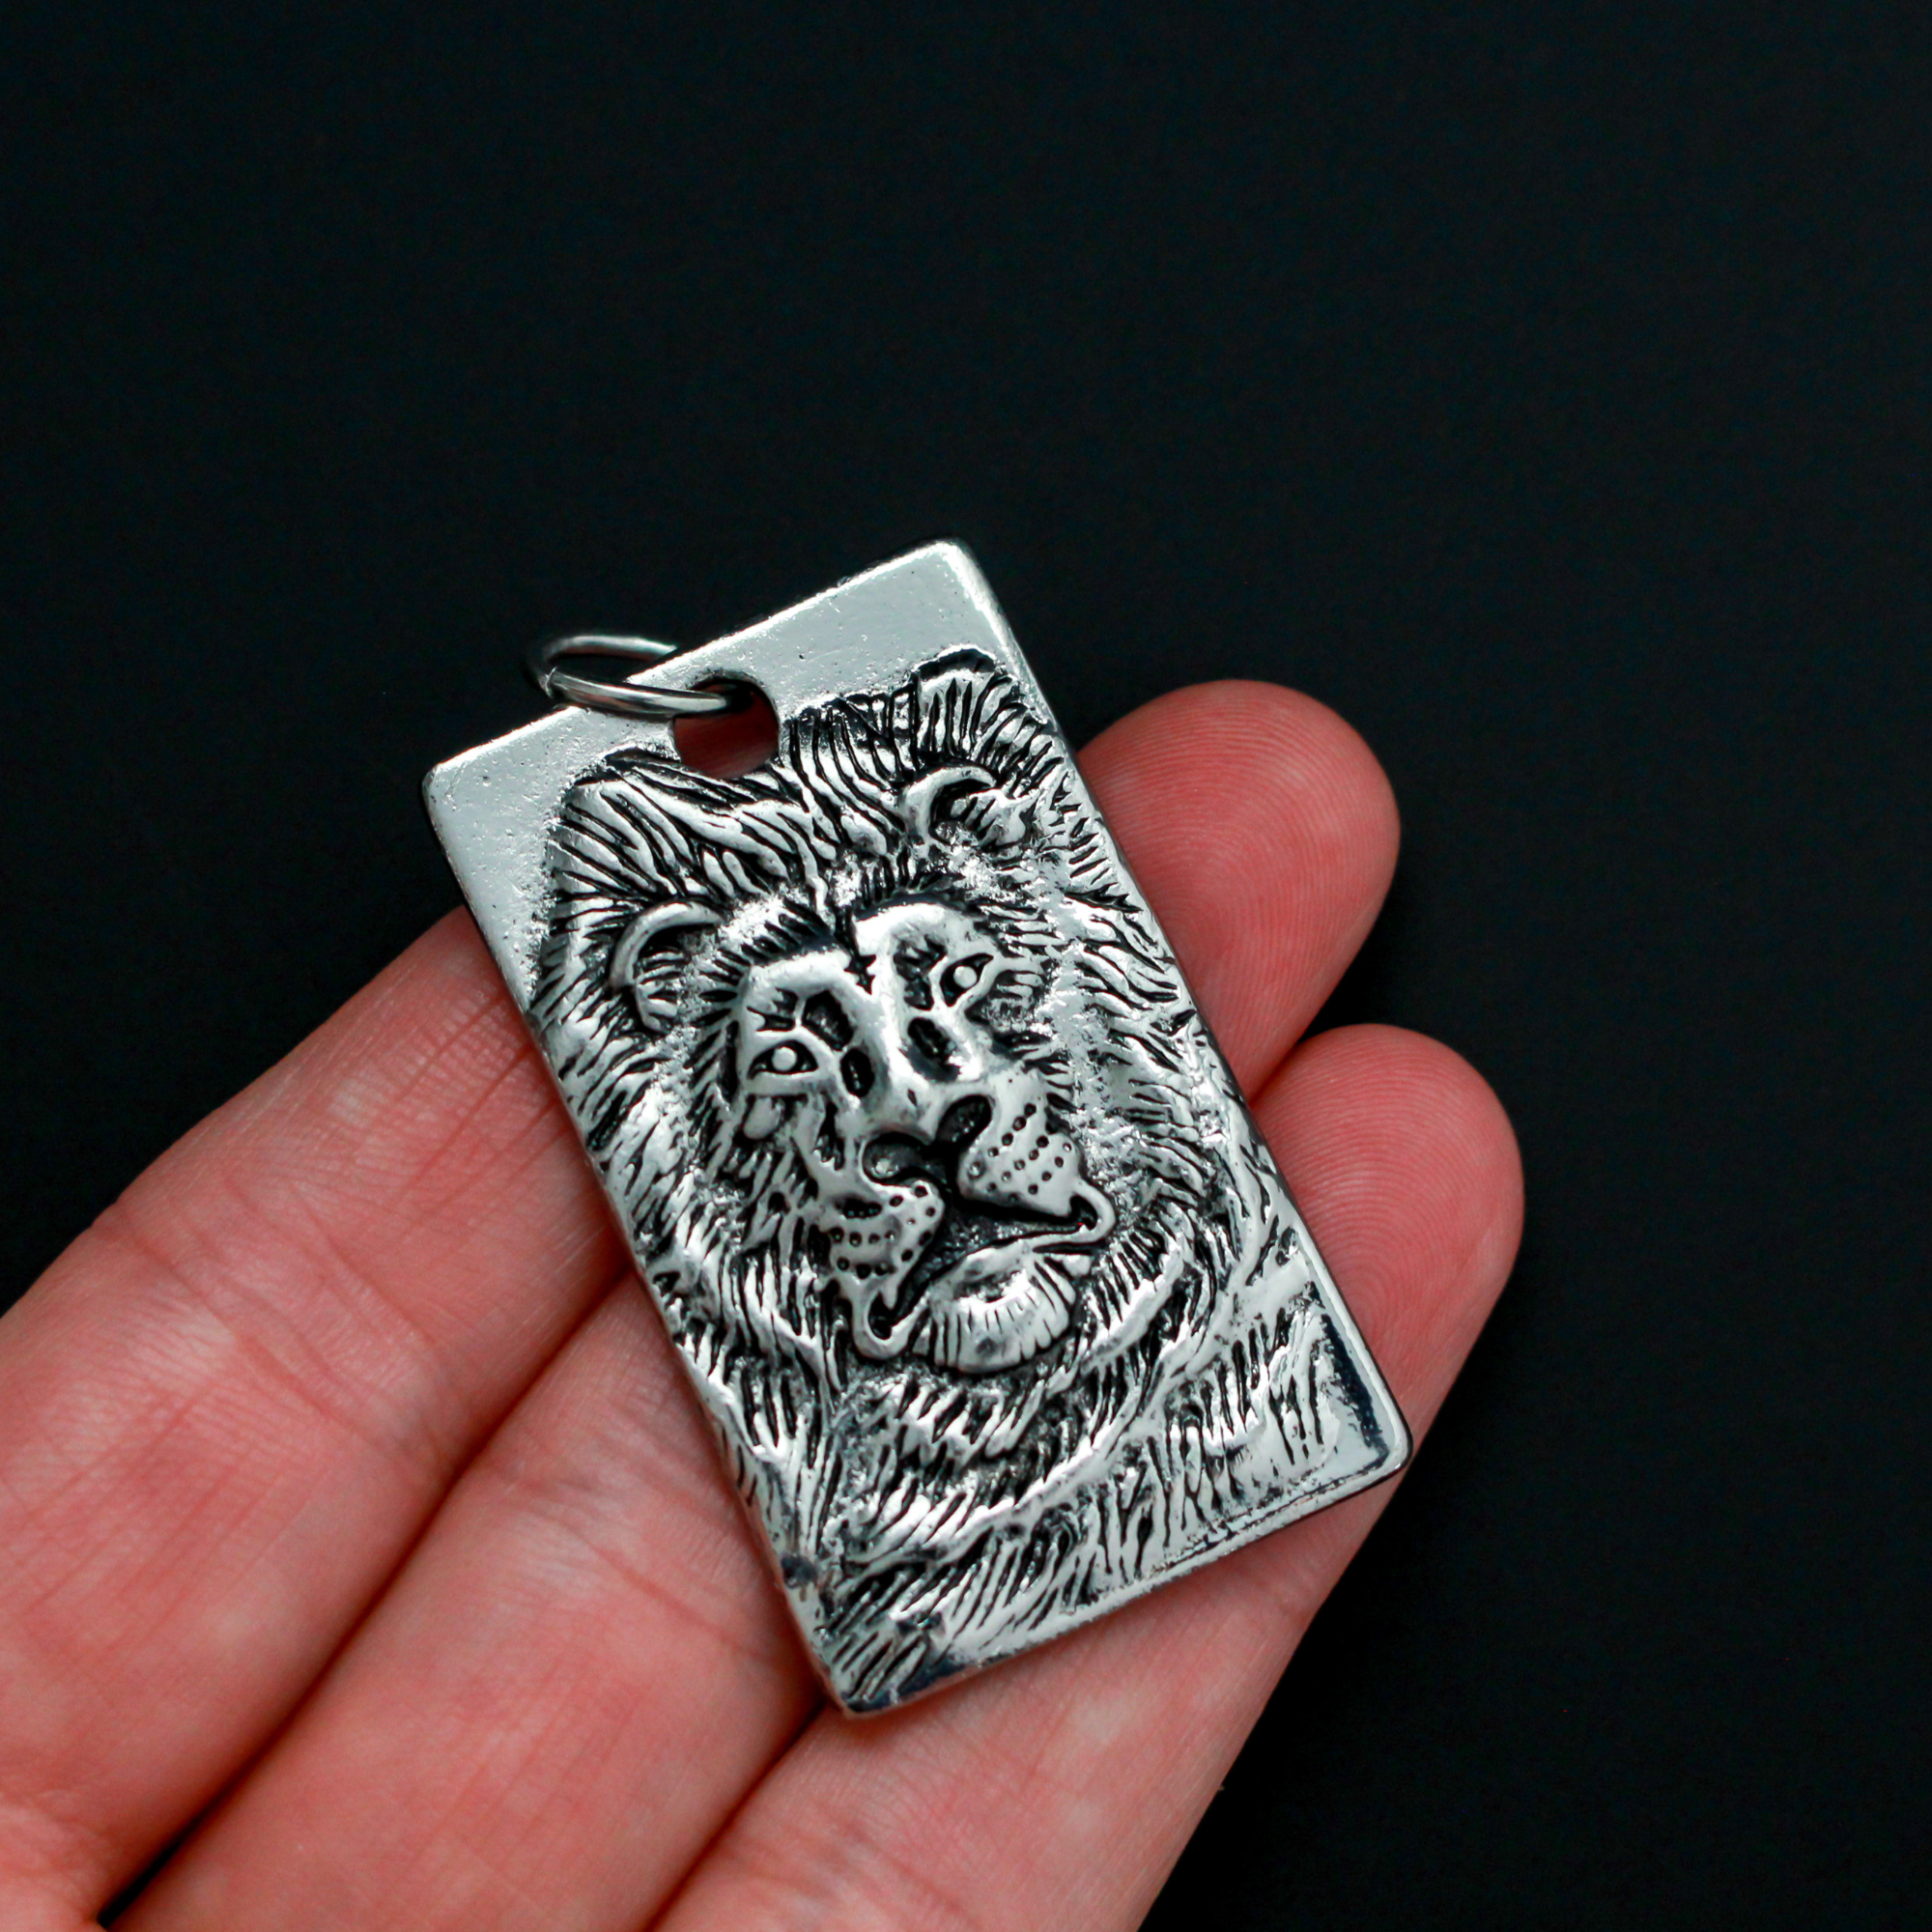 Large Rectangle pendant that depicts a 3D a lion face, 1.75 inches long